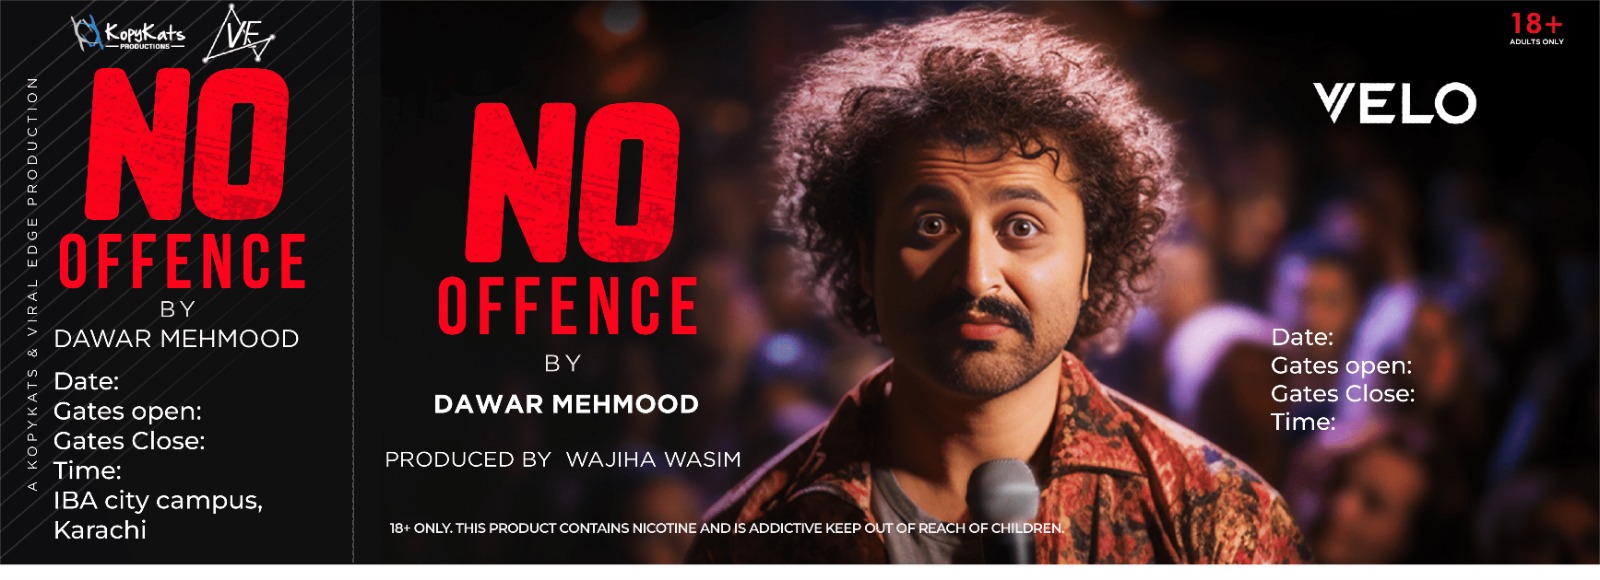 No Offence” by Dawar Mehmood 